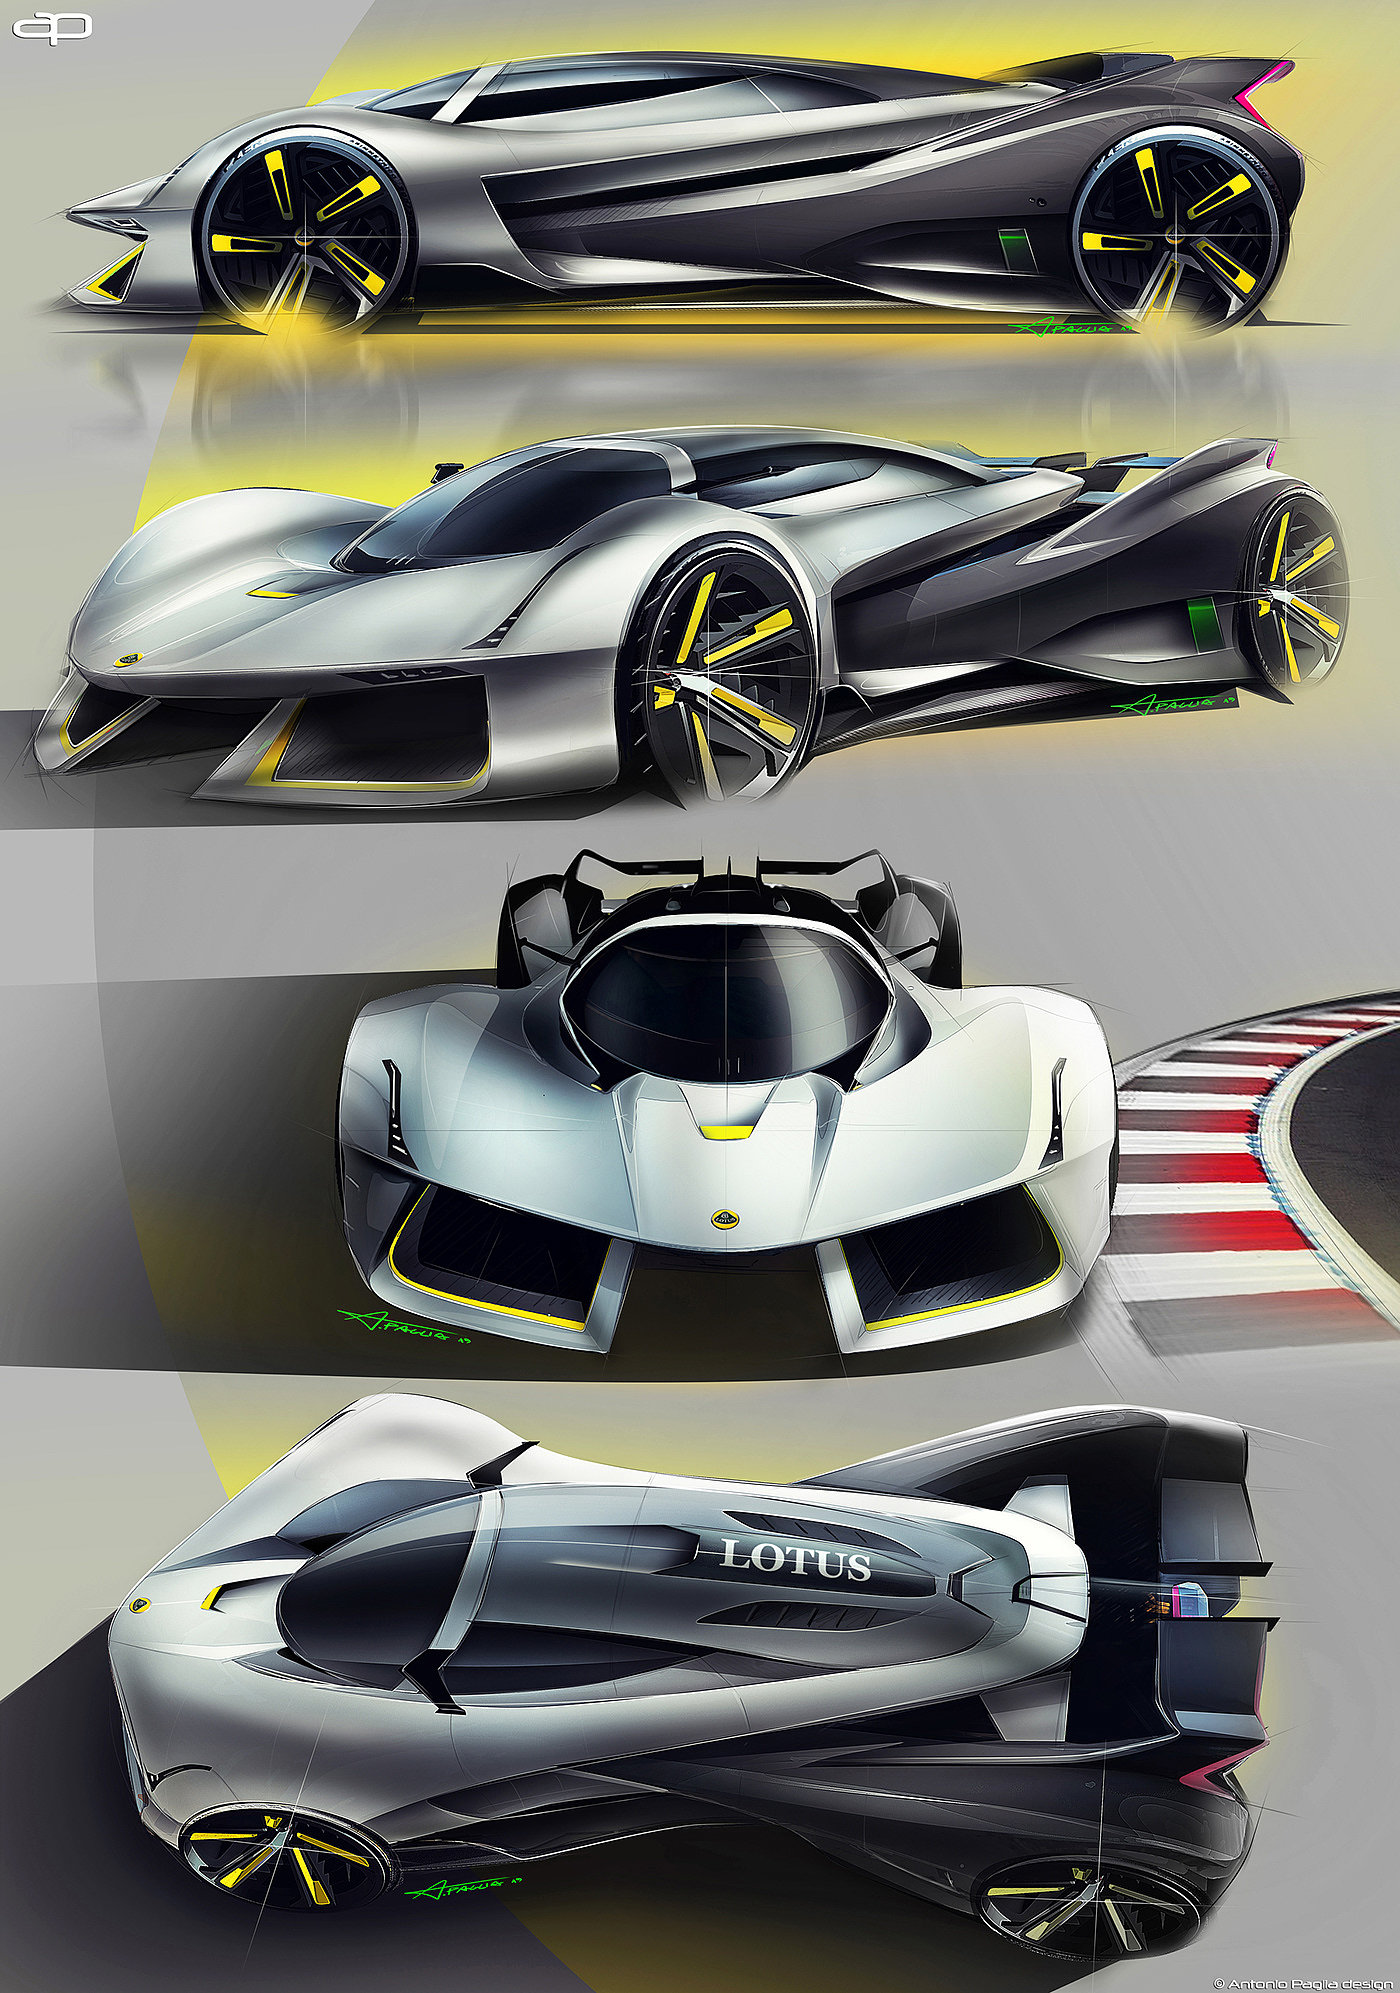 f1，莲花，lotus，Antonio Paglia，gt，Lotus Evil Vision，汽车，赛车，